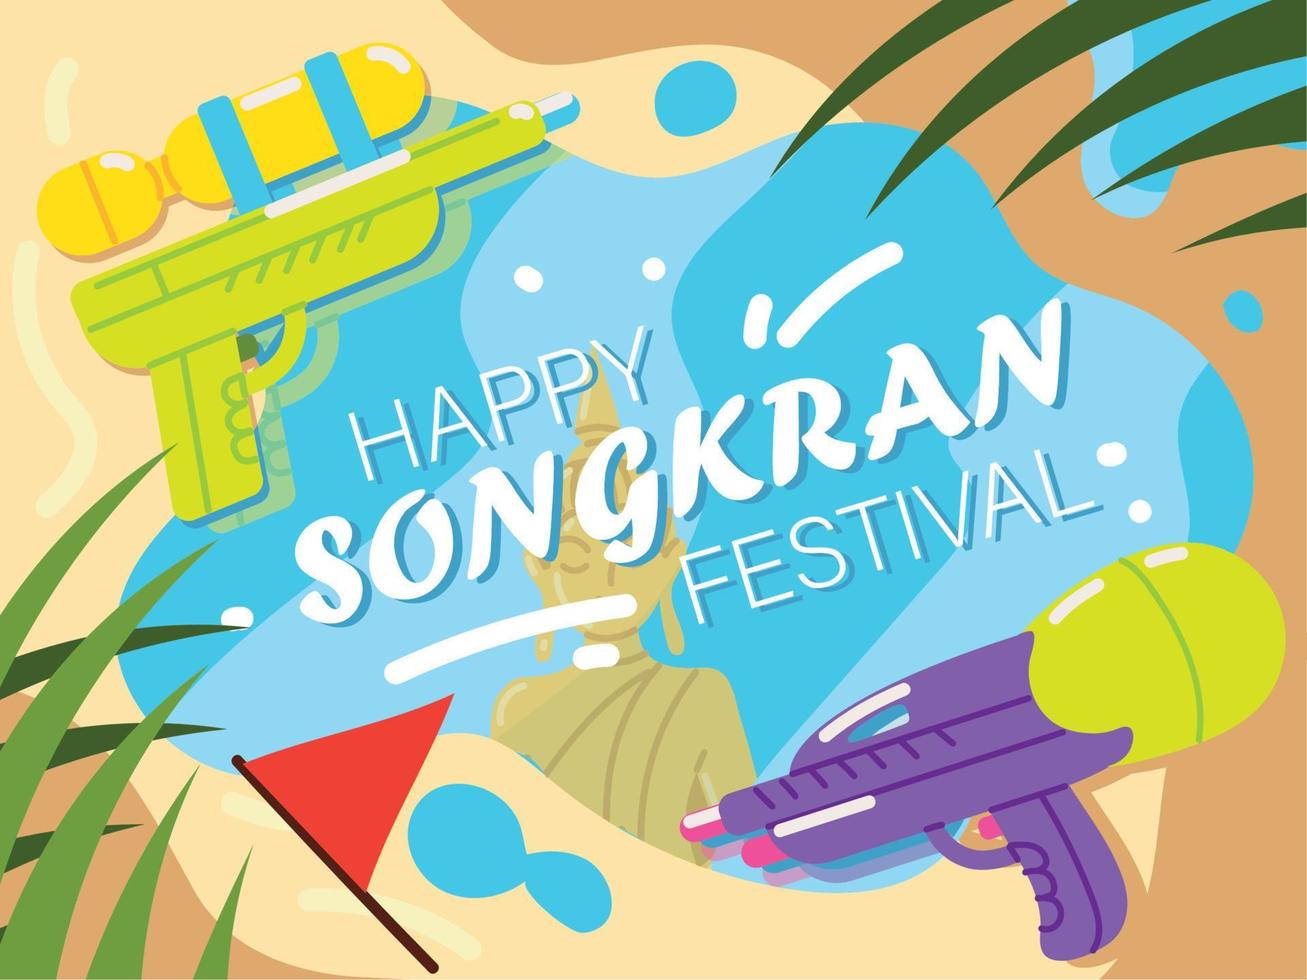 Fröhliche Songkran-Festivalkarte vektor